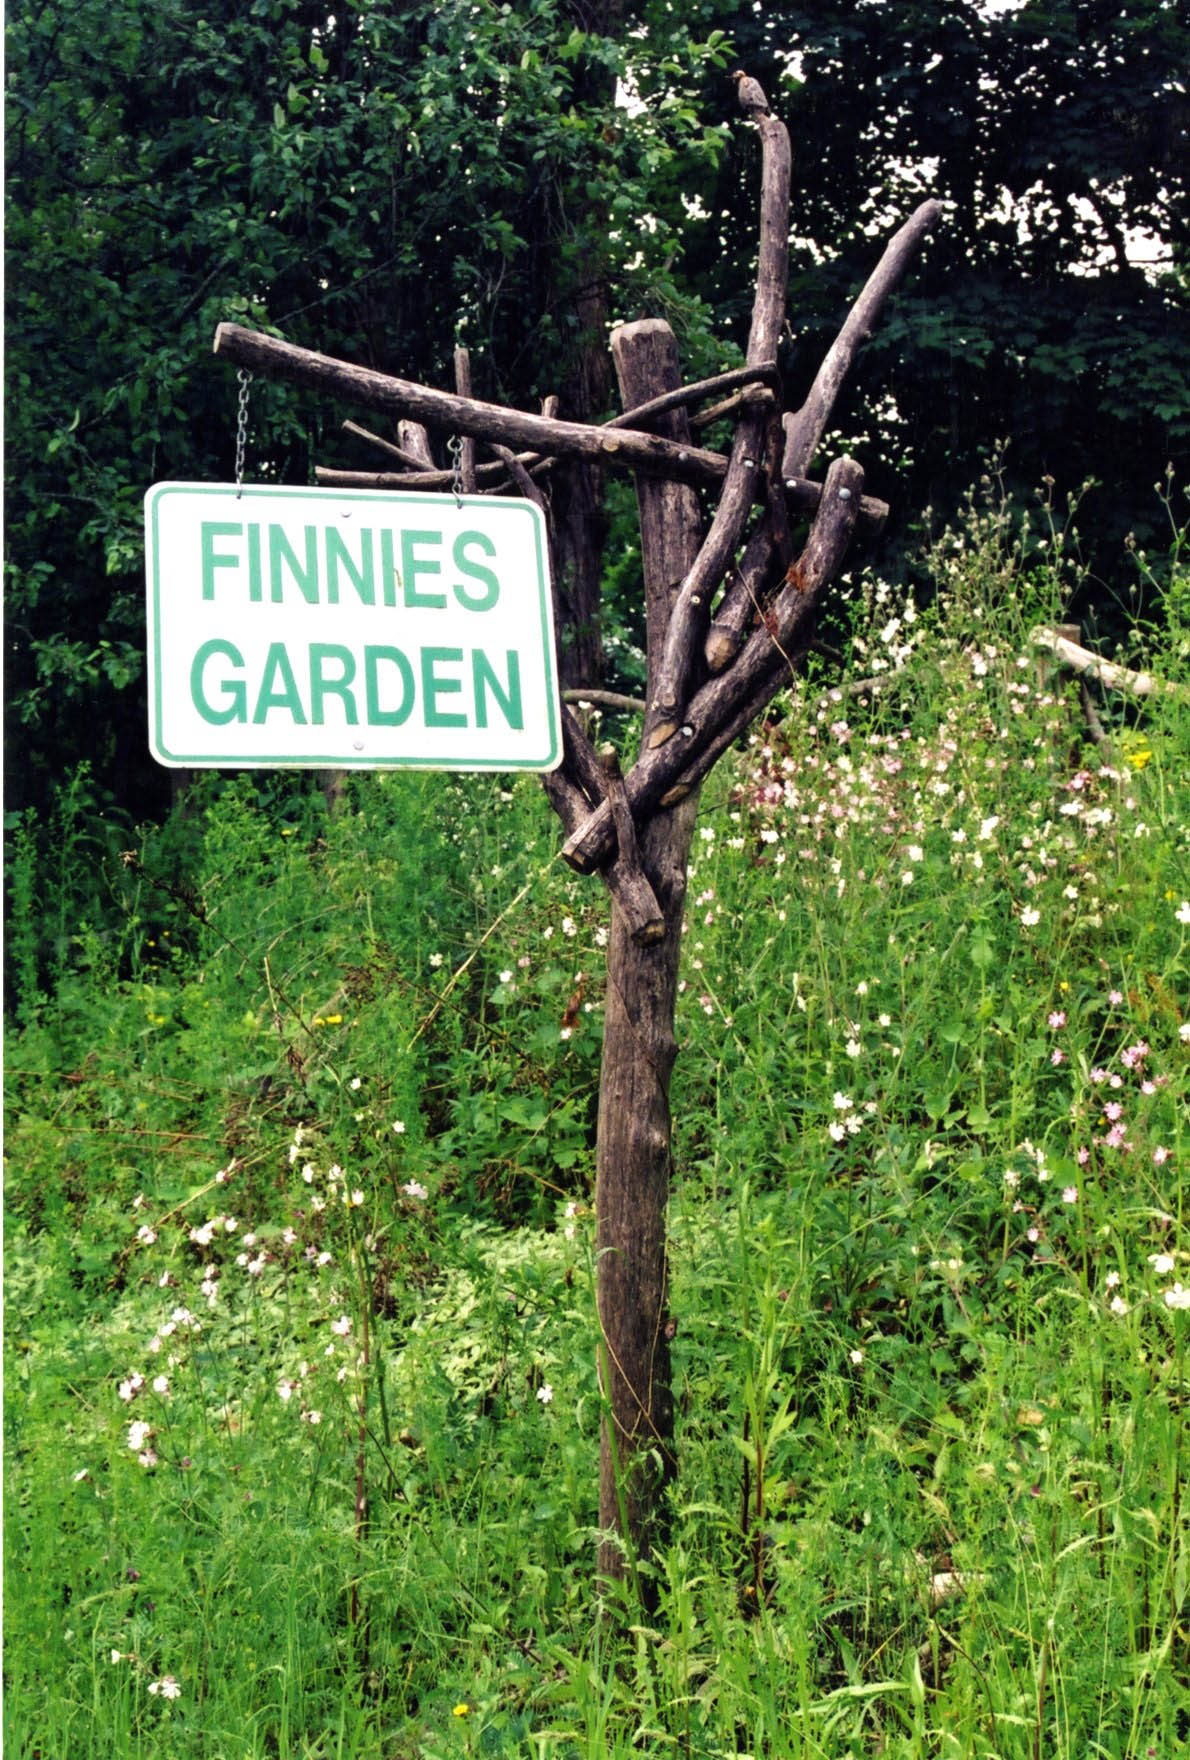 Photograph of Finnie’s Garden sign, date unknown